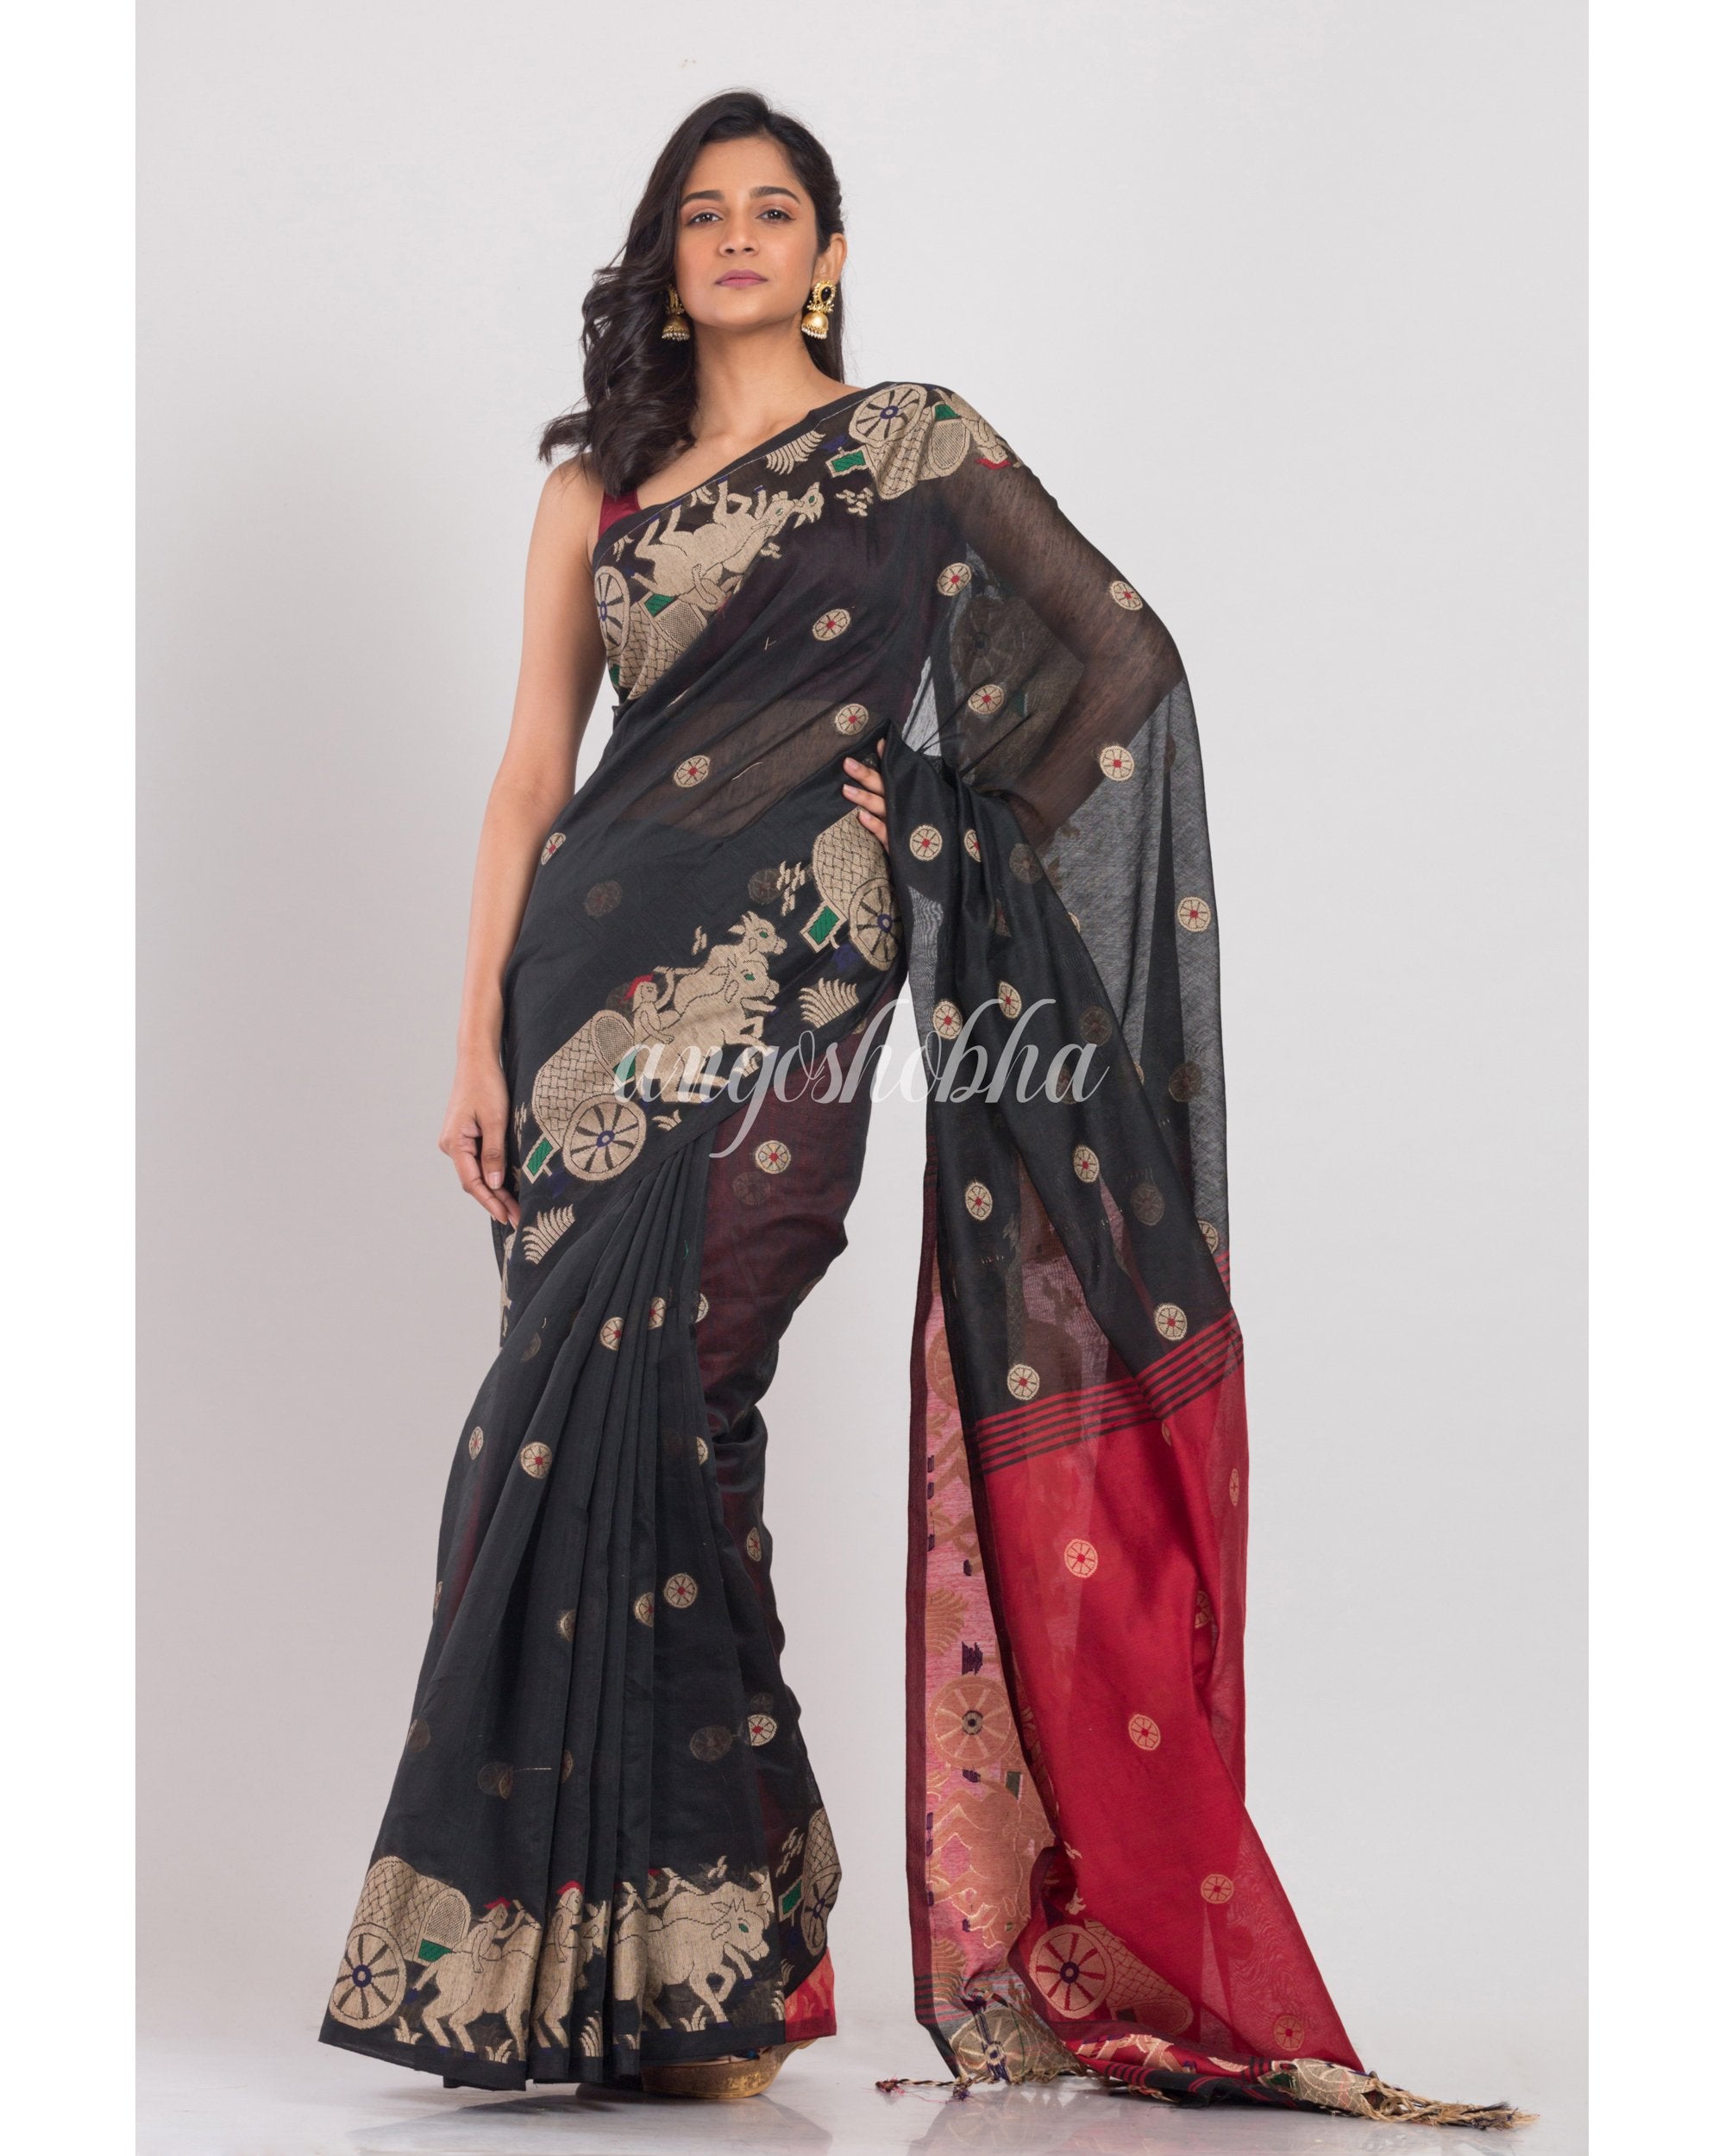 Women's Black Handloom Blended Cotton Saree - Angoshobha